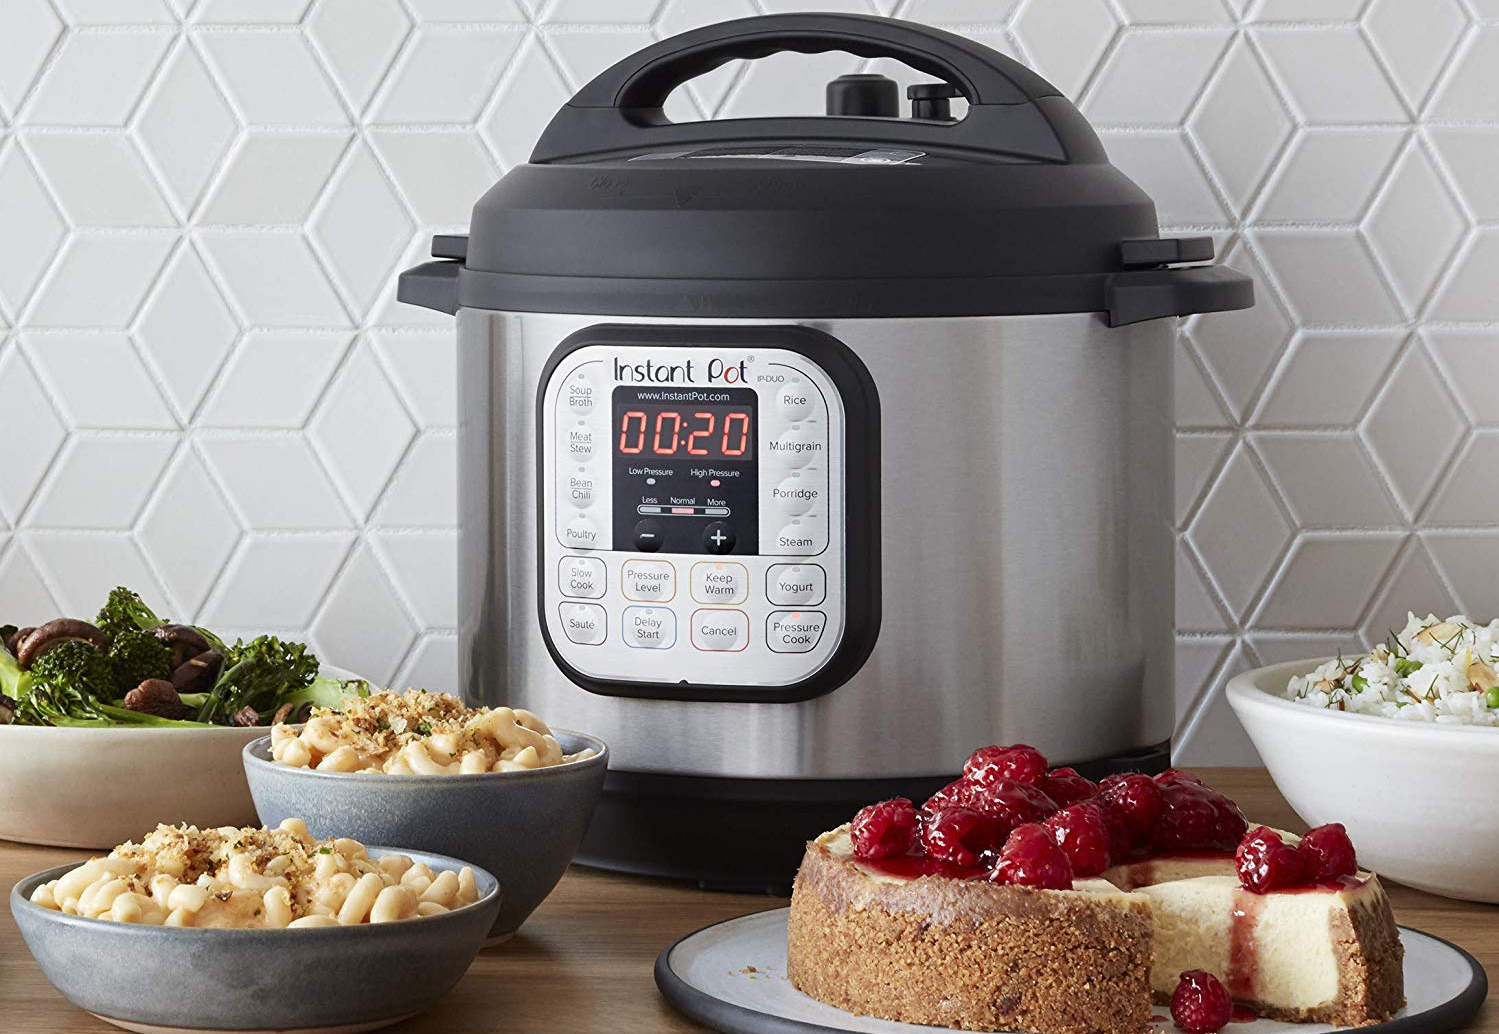 https://www.digitaltrends.com/wp-content/uploads/2019/12/instant-pot-duo-80-7-in-1-electric-pressure-cooker-1.jpg?fit=1499%2C1034&p=1